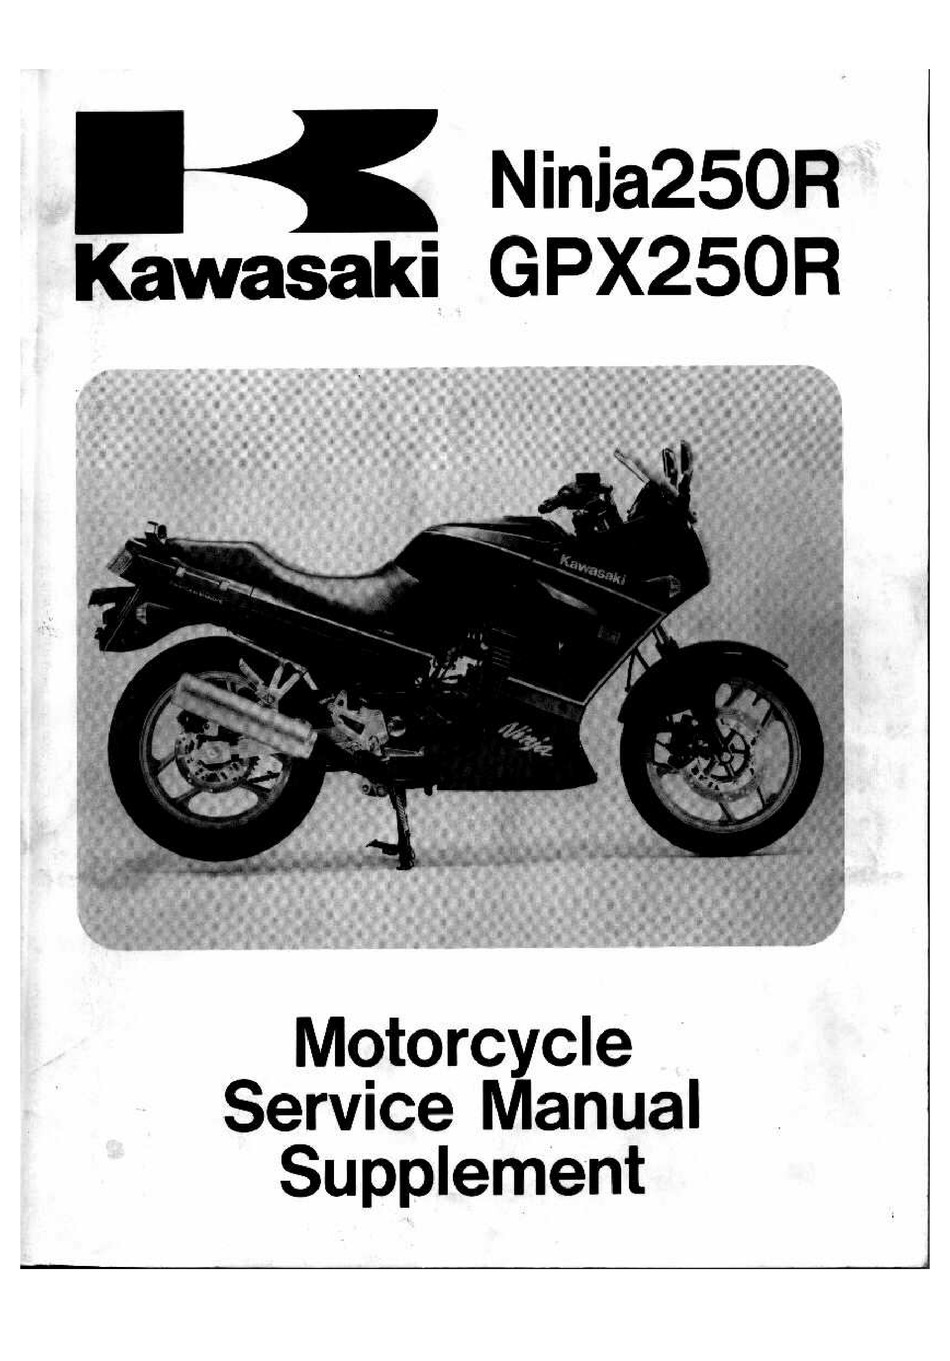 KAWASAKI NINJA 250R SERVICE MANUAL Download |